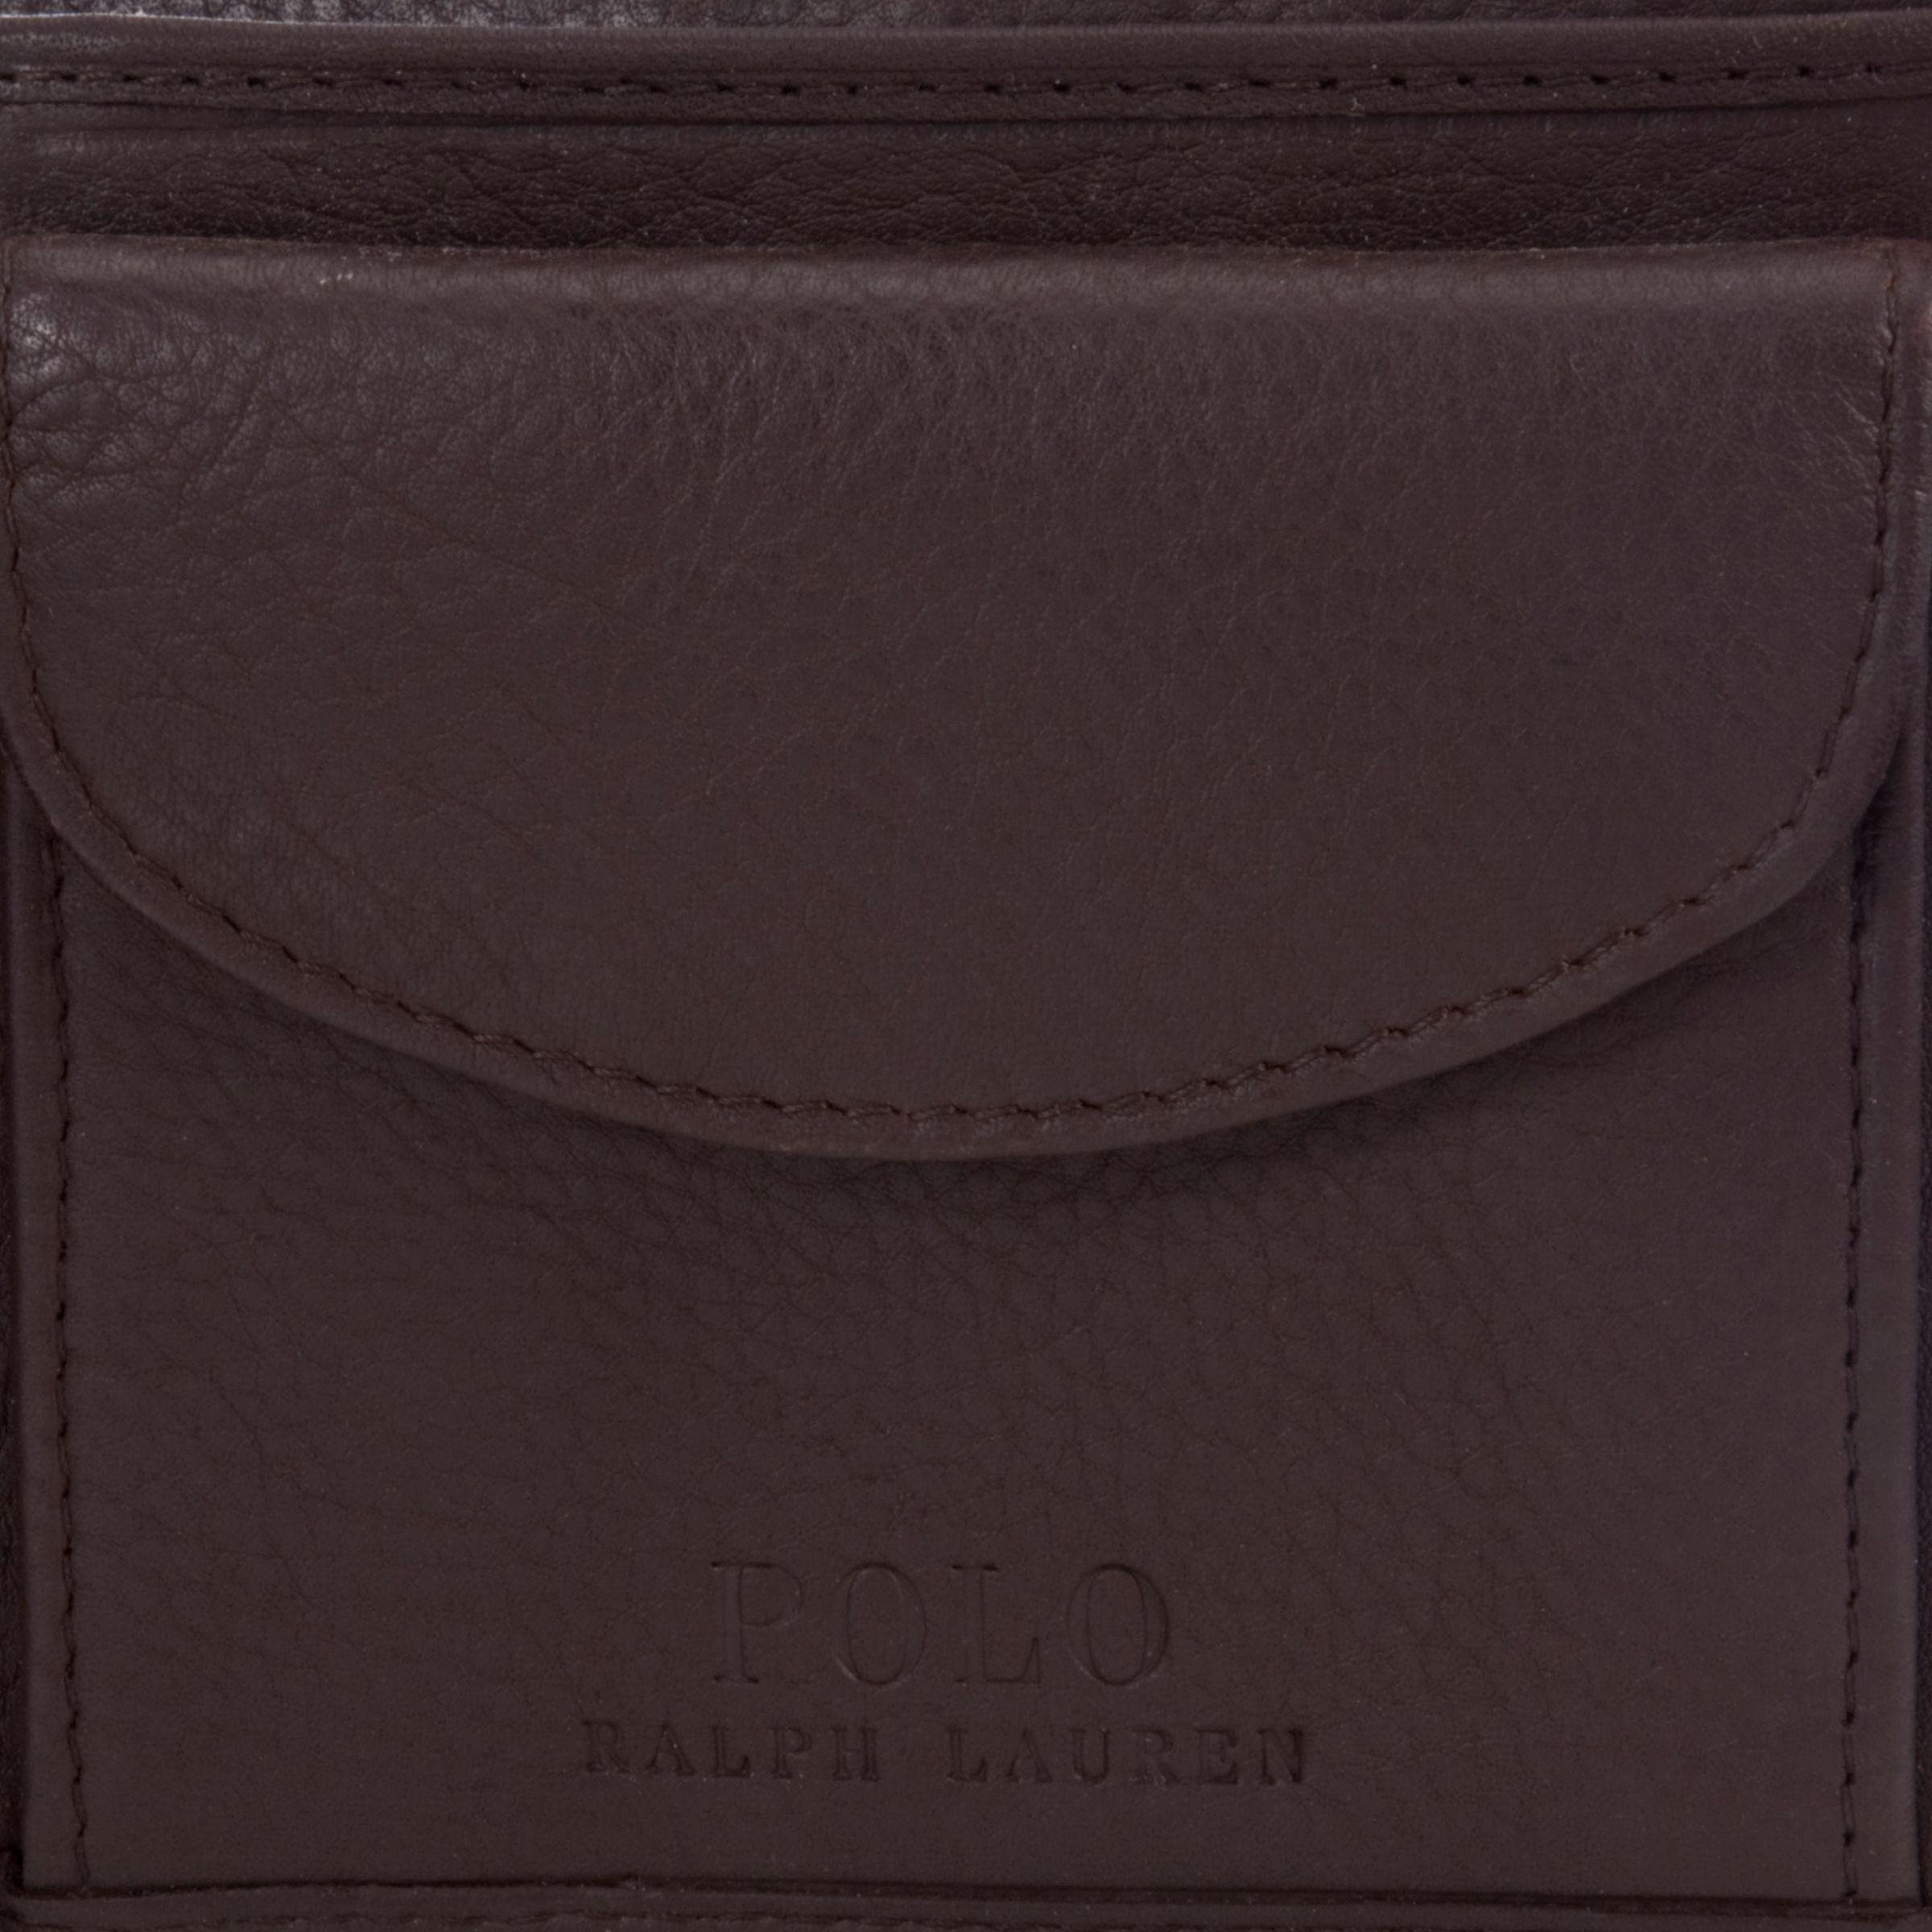 Buy Polo Ralph Lauren Pebble Leather Wallet Online at johnlewis.com